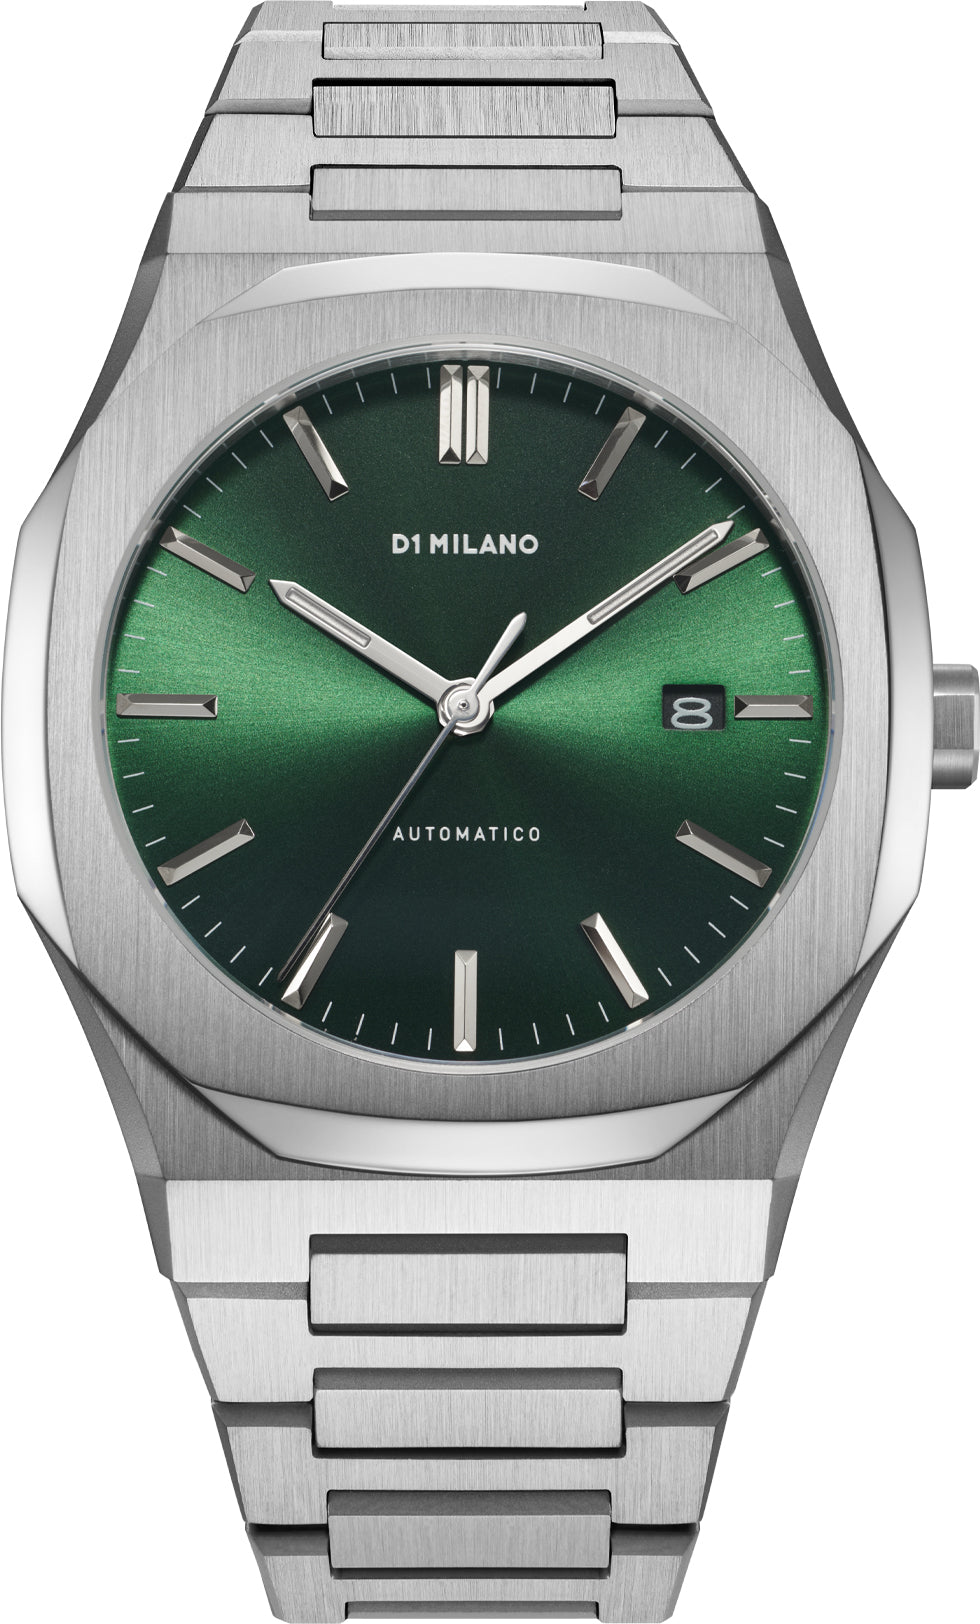 Photos - Wrist Watch Milano D1  Watch Automatic Bracelet Green - Green DLM-089 